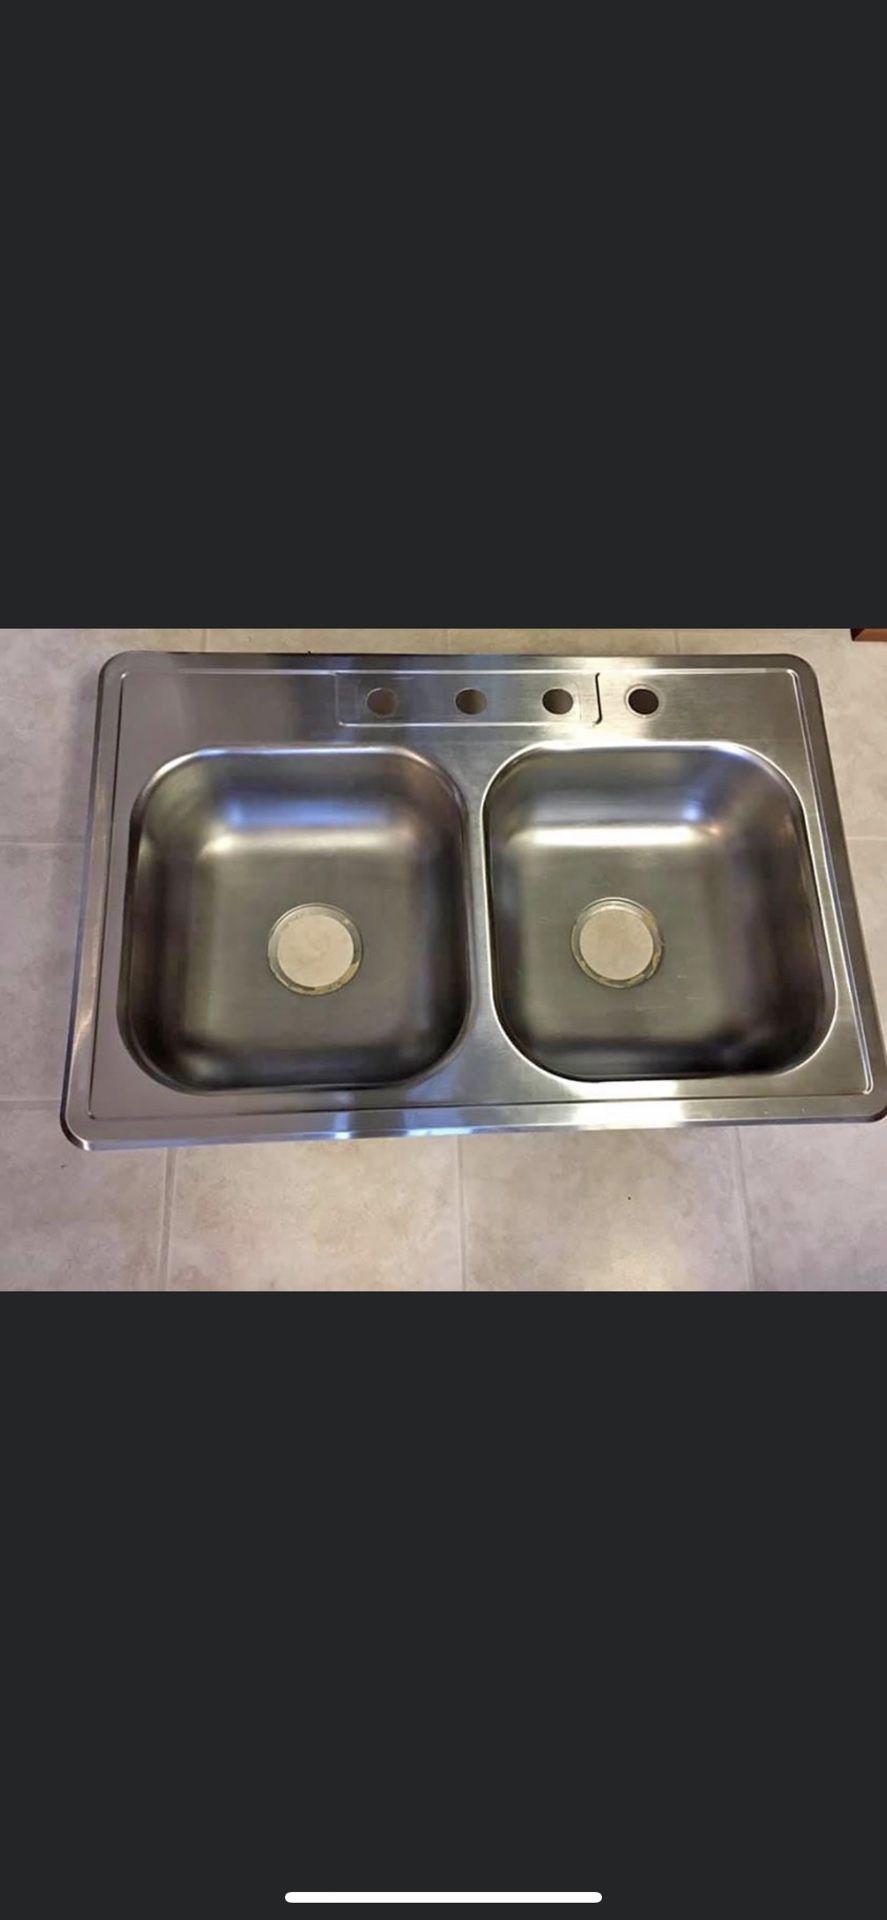 4 hole Stainless Steel Kitchen sink 33” x 22”